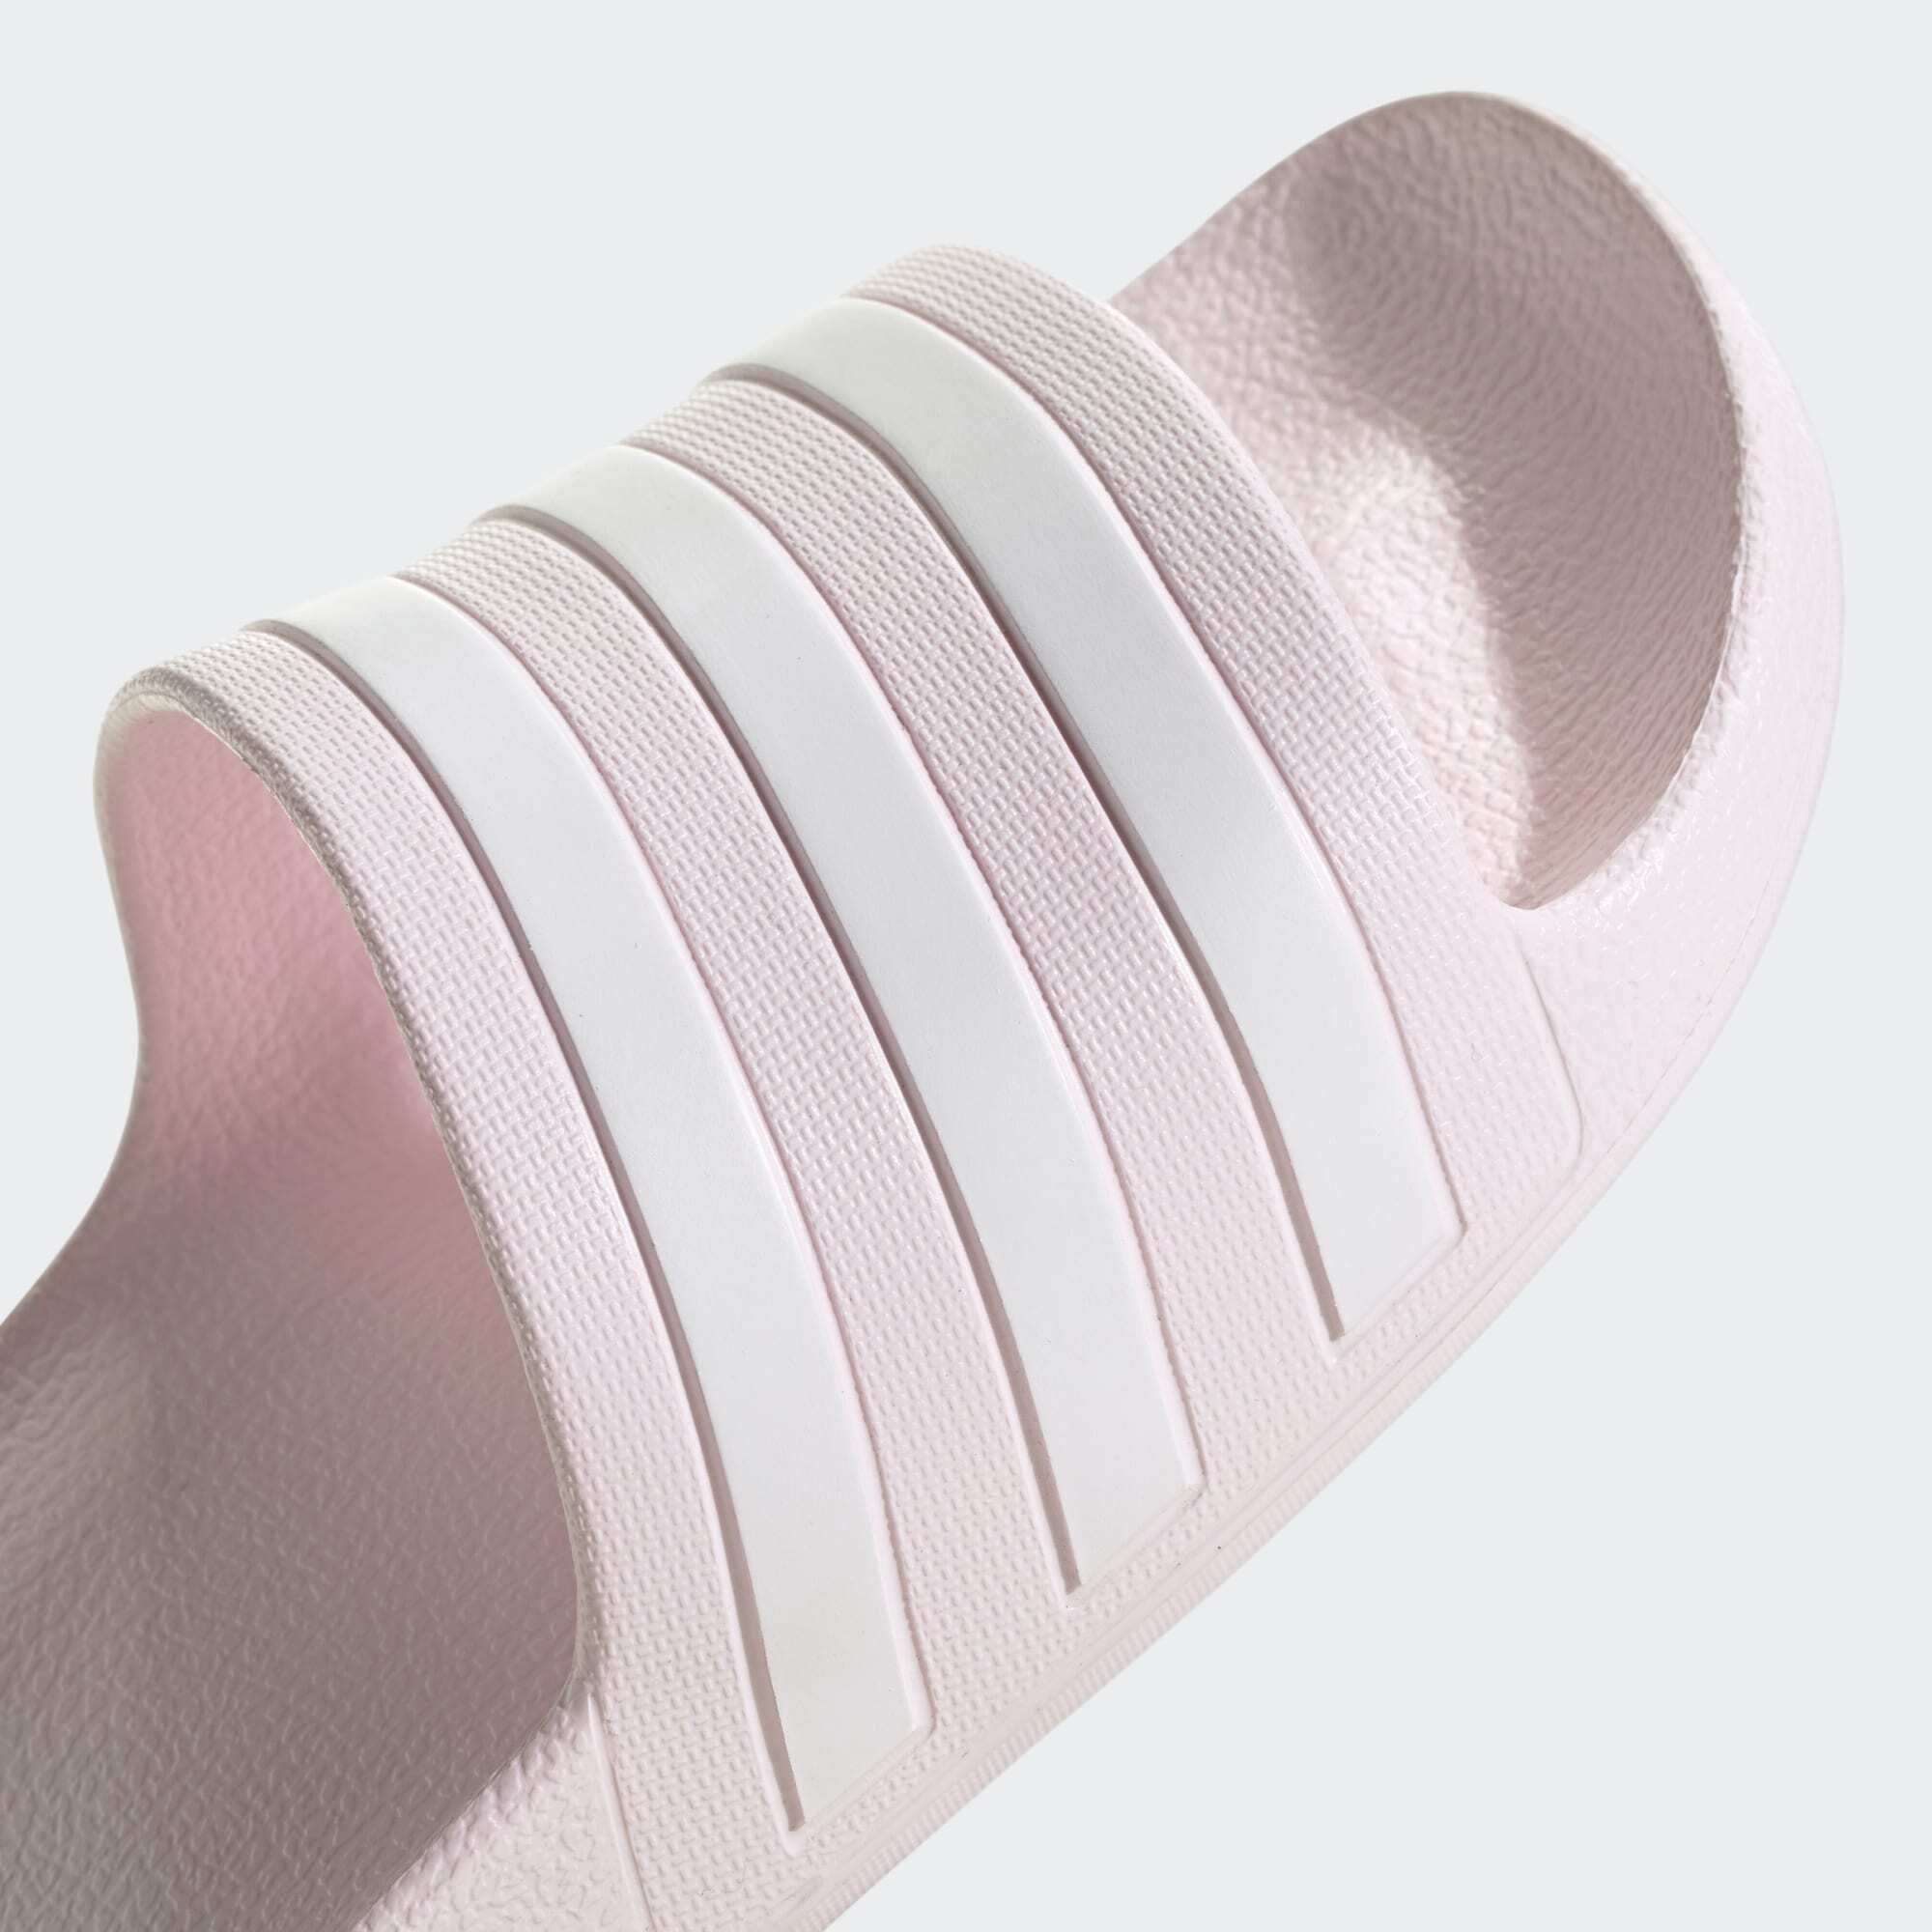 Cloud Sportswear Badesandale Almost / adidas Pink Almost Pink / AQUA ADILETTE White